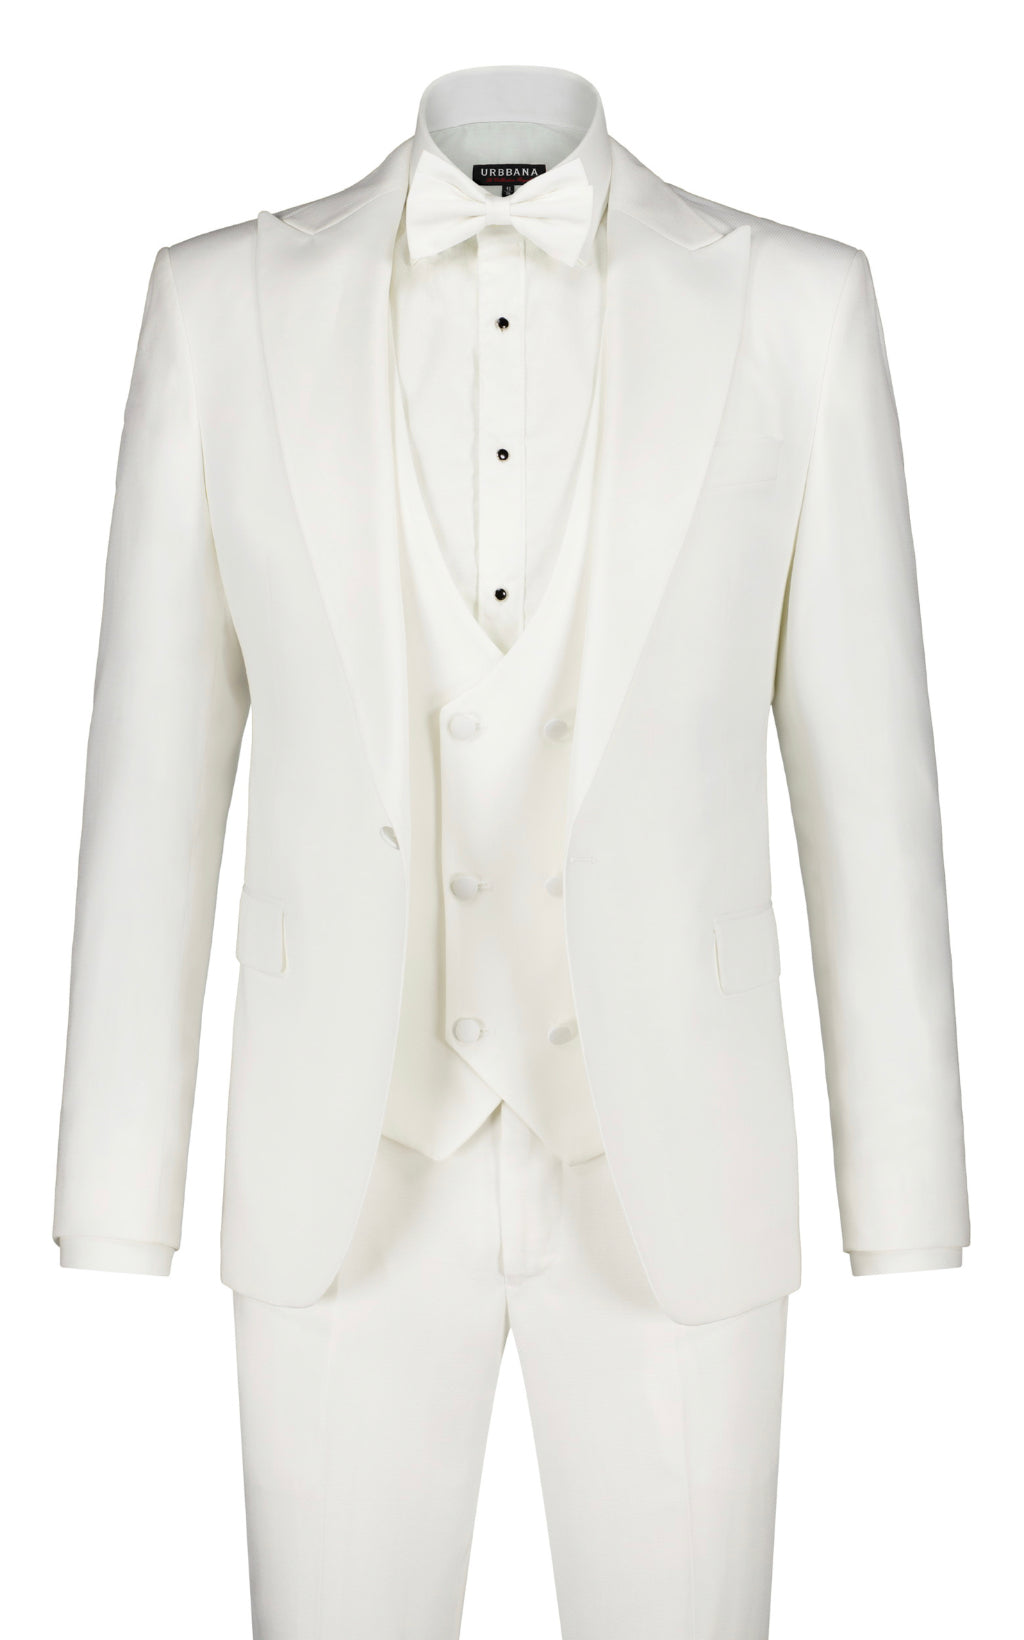 The Beyaz Ceremony Suit - Suit by Urbbana